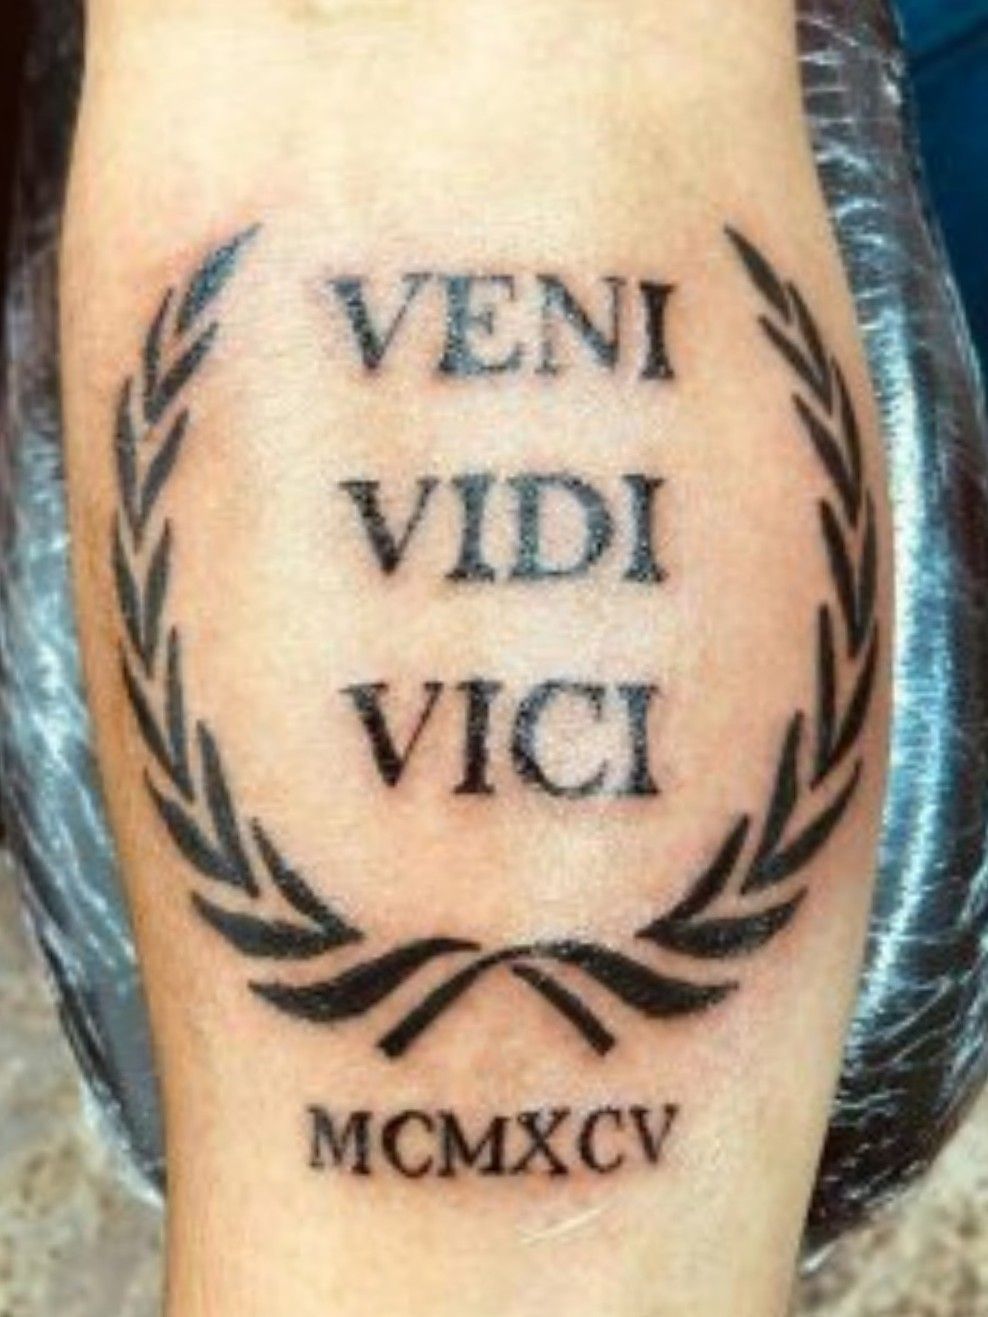 Veni Vidi Vici Tattoo Meaning, Design & Ideas